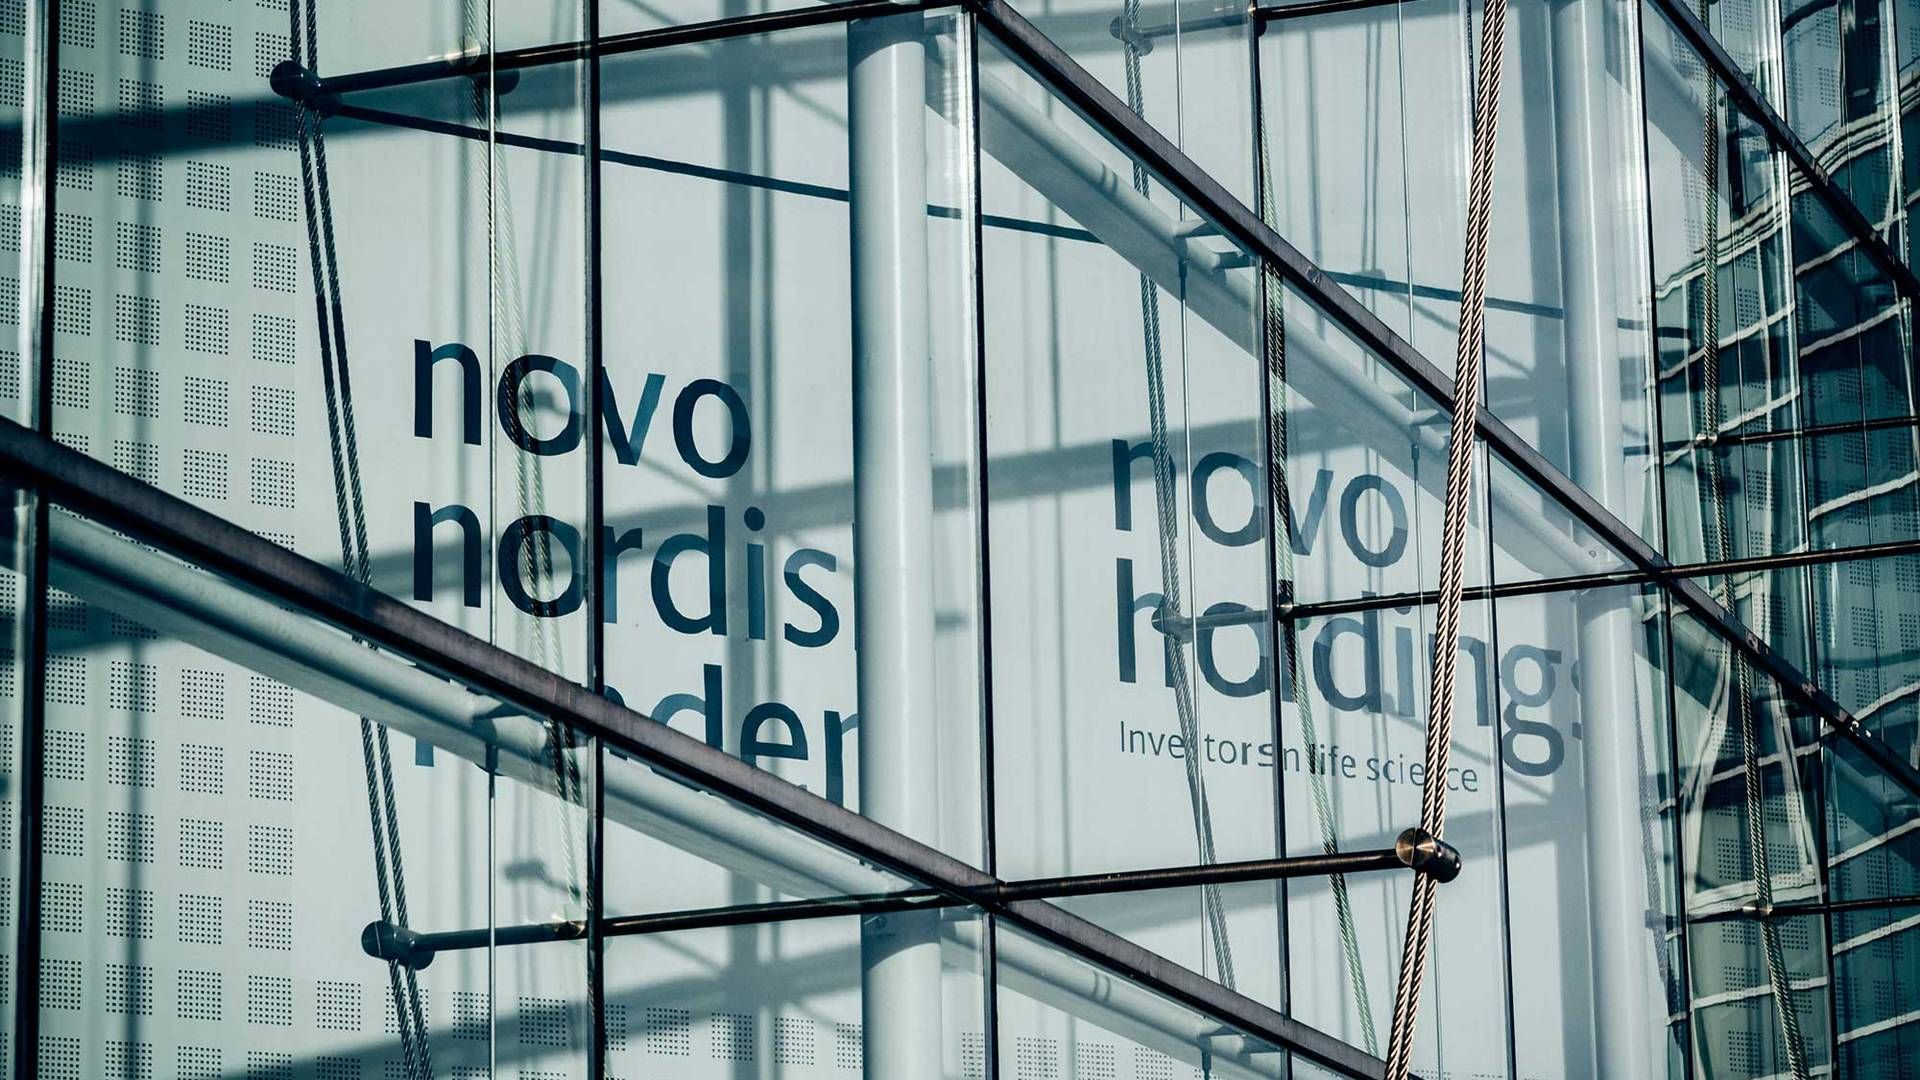 Novo Holdings har nu samlede værdier for 1114 mia. kr. – altså over en billion kr. | Foto: Novo Holdings / Pr